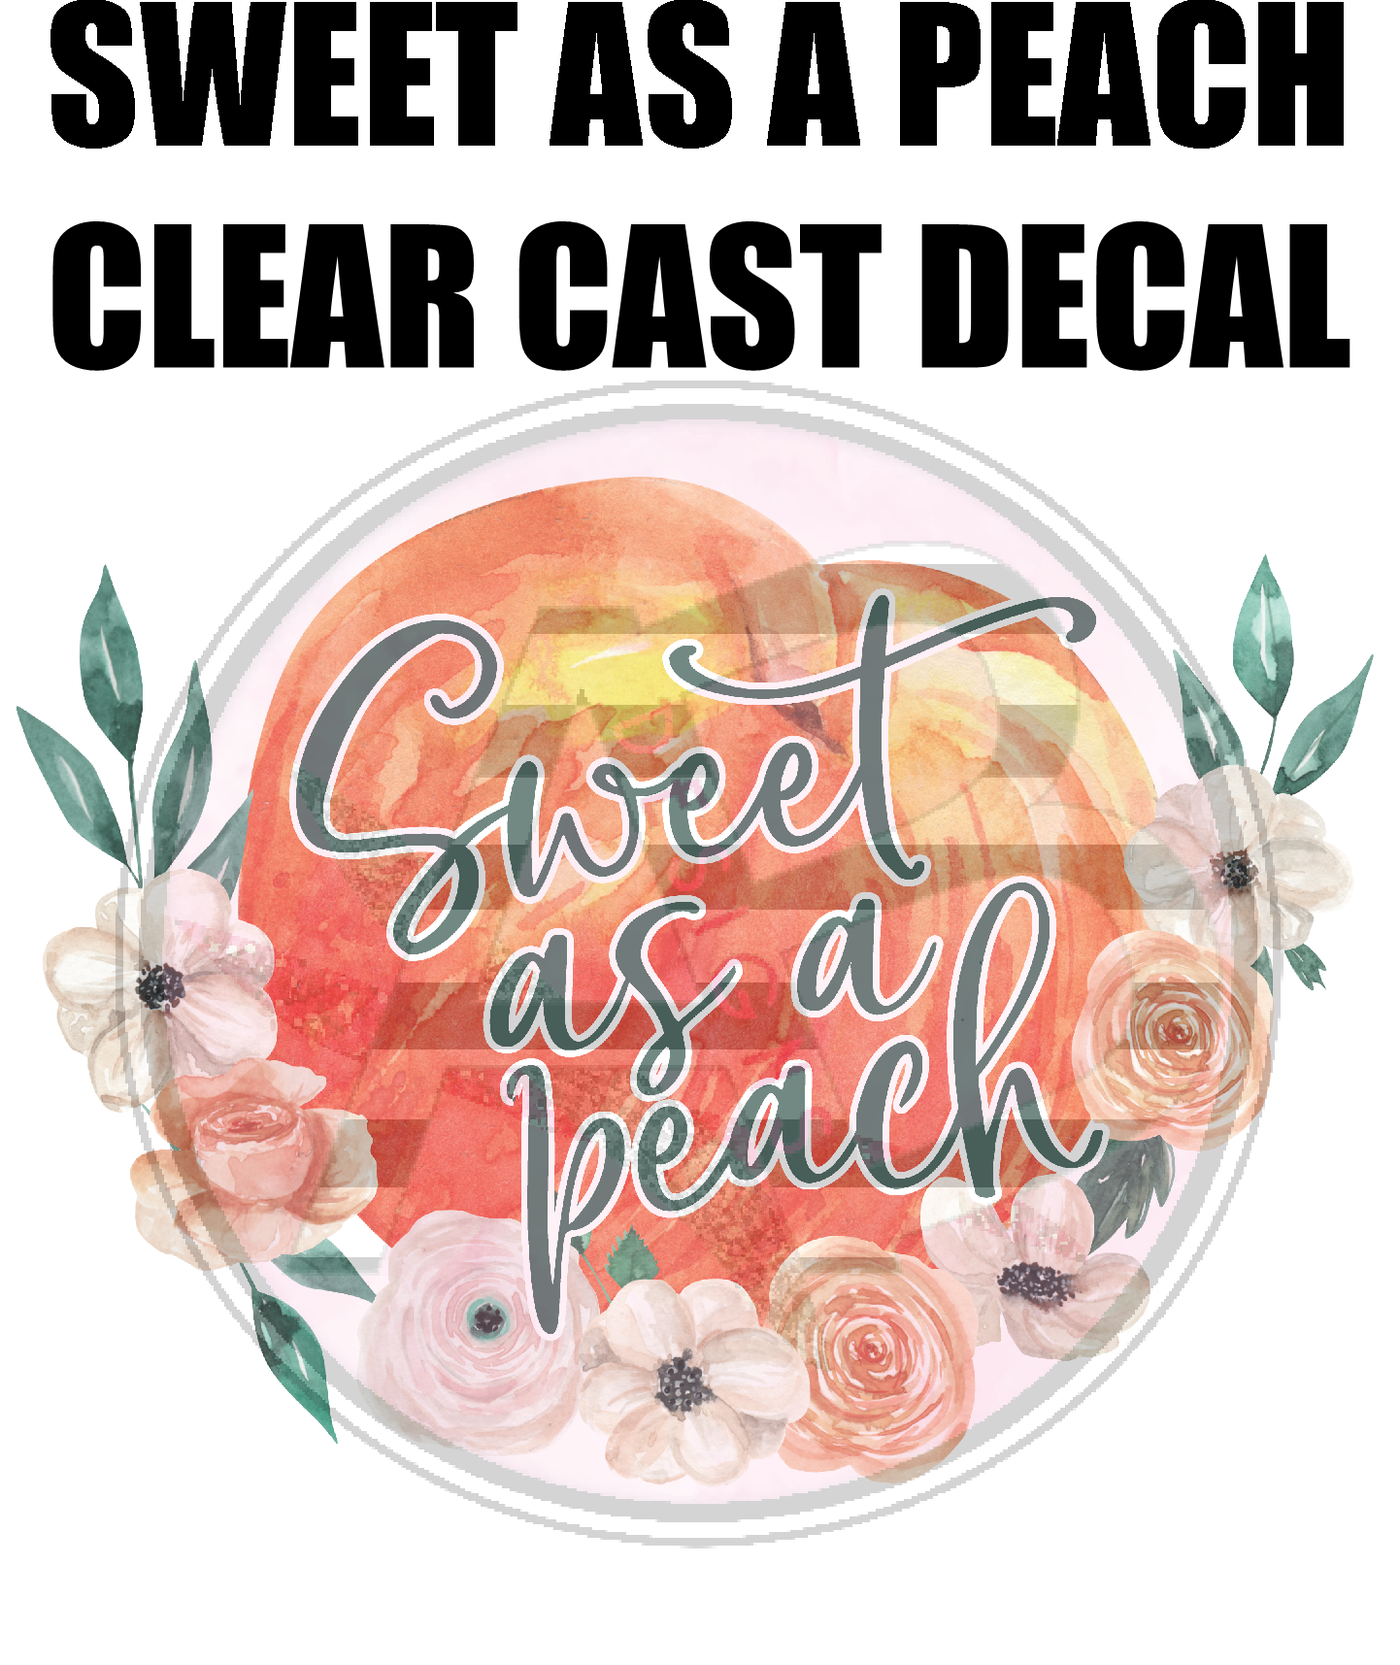 Sweet as a Peach - Clear Cast Decal